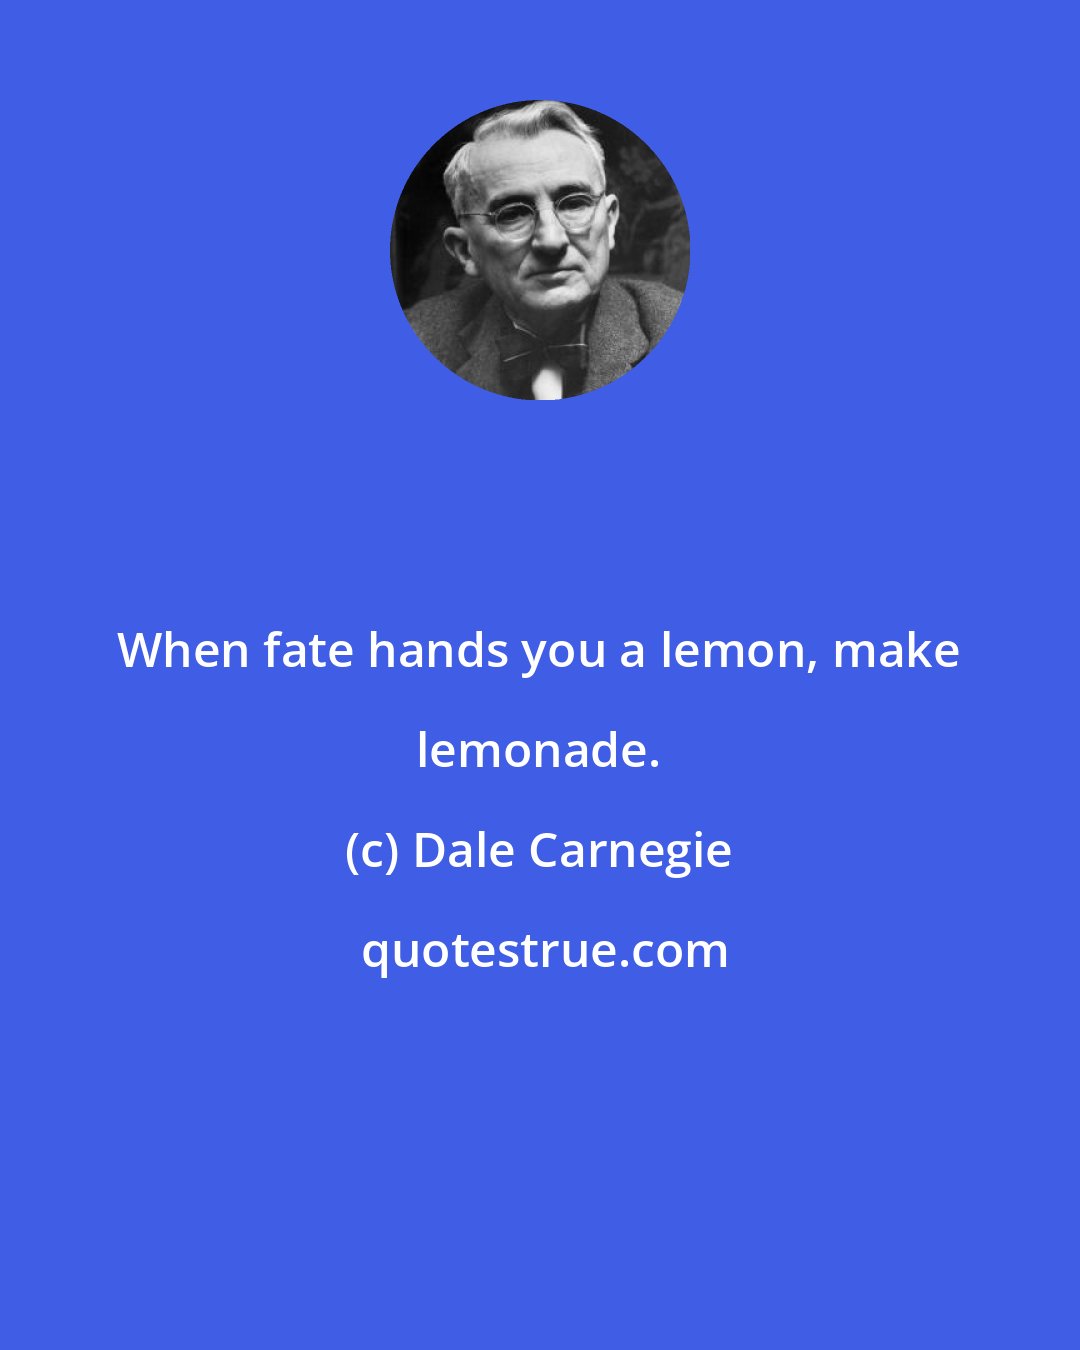 Dale Carnegie: When fate hands you a lemon, make lemonade.